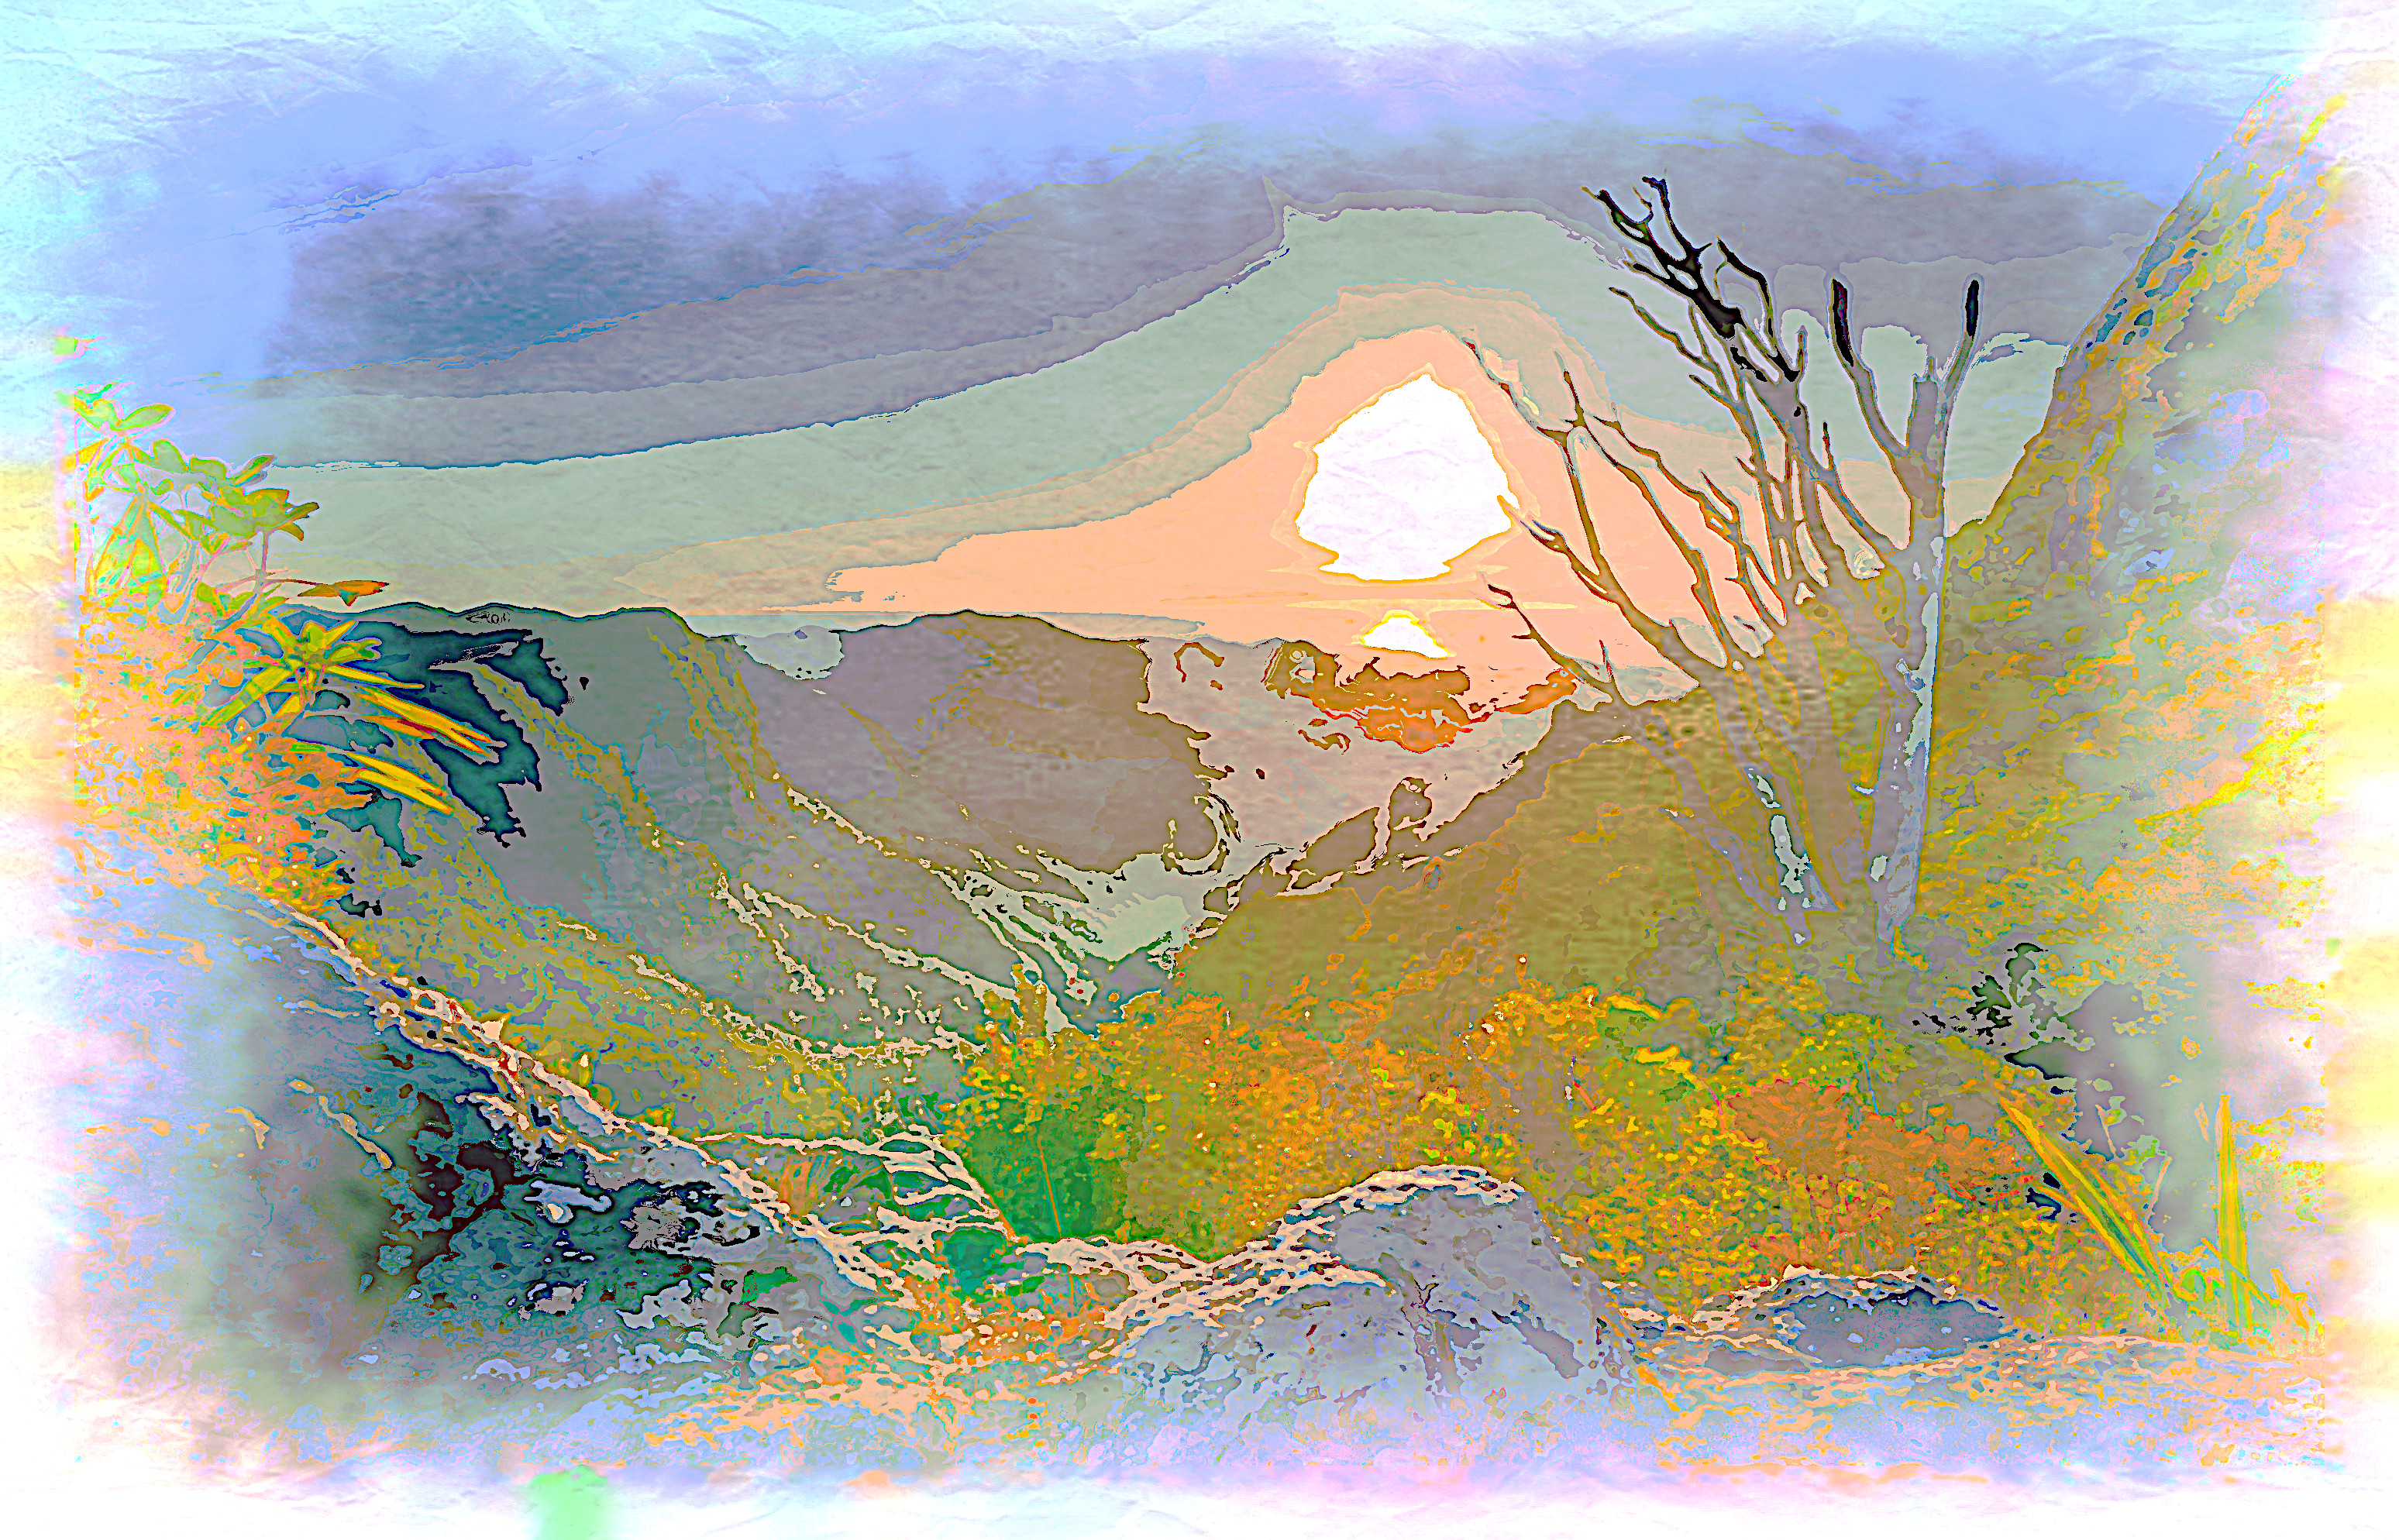 2020-04-05 17-19-39 jasper-boer-LJD6U920zVo-unsplash as a digital aquarel, using18 colours, source landscape, look contrast plus.jpg